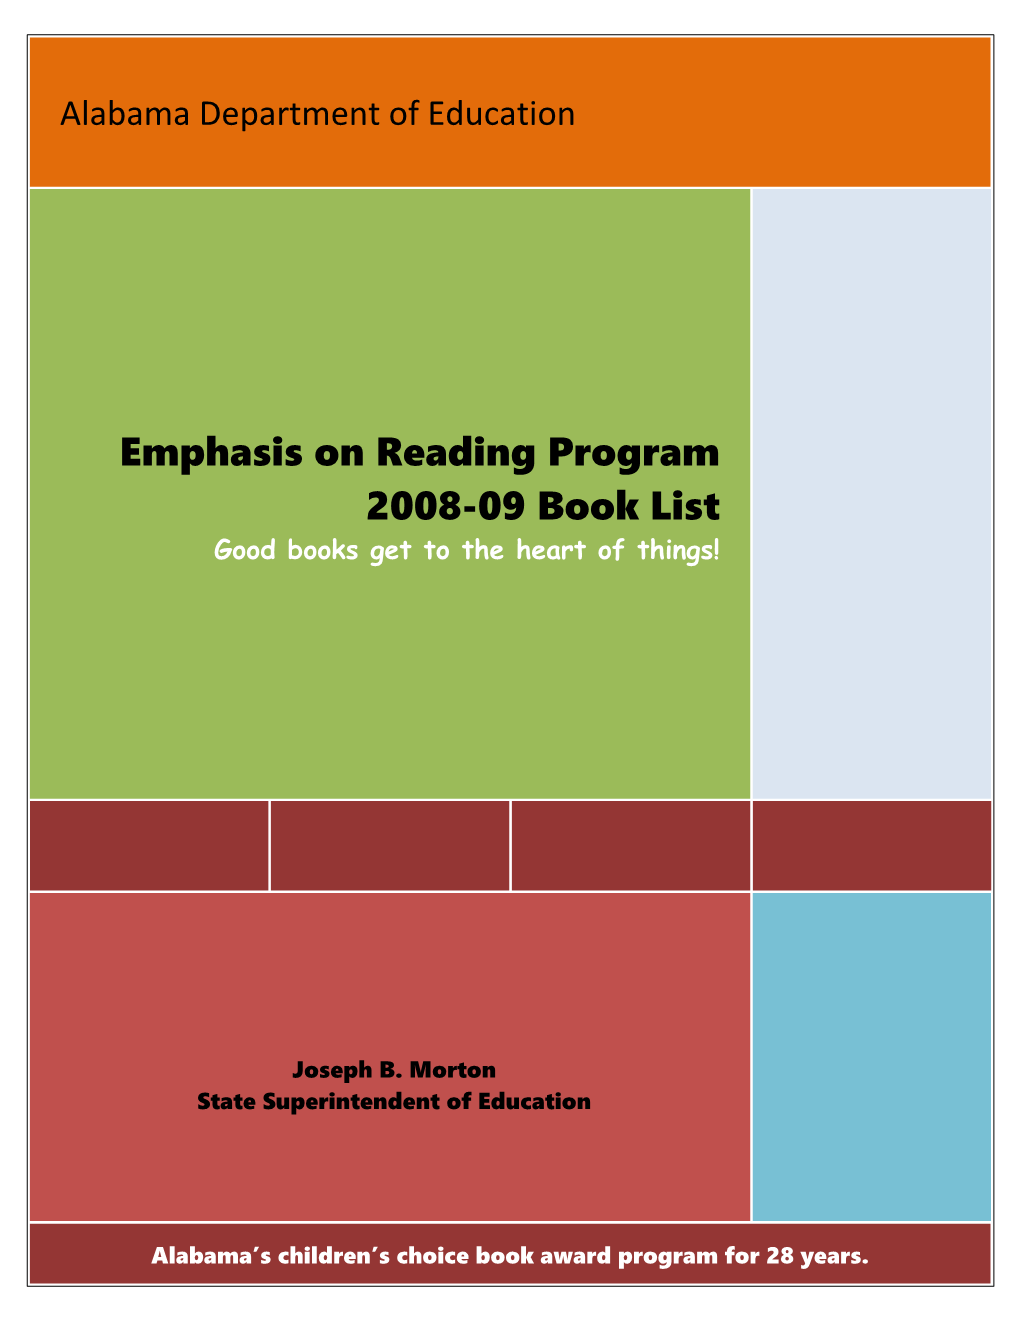 Emphasis on Reading Program 2008-09 Book List